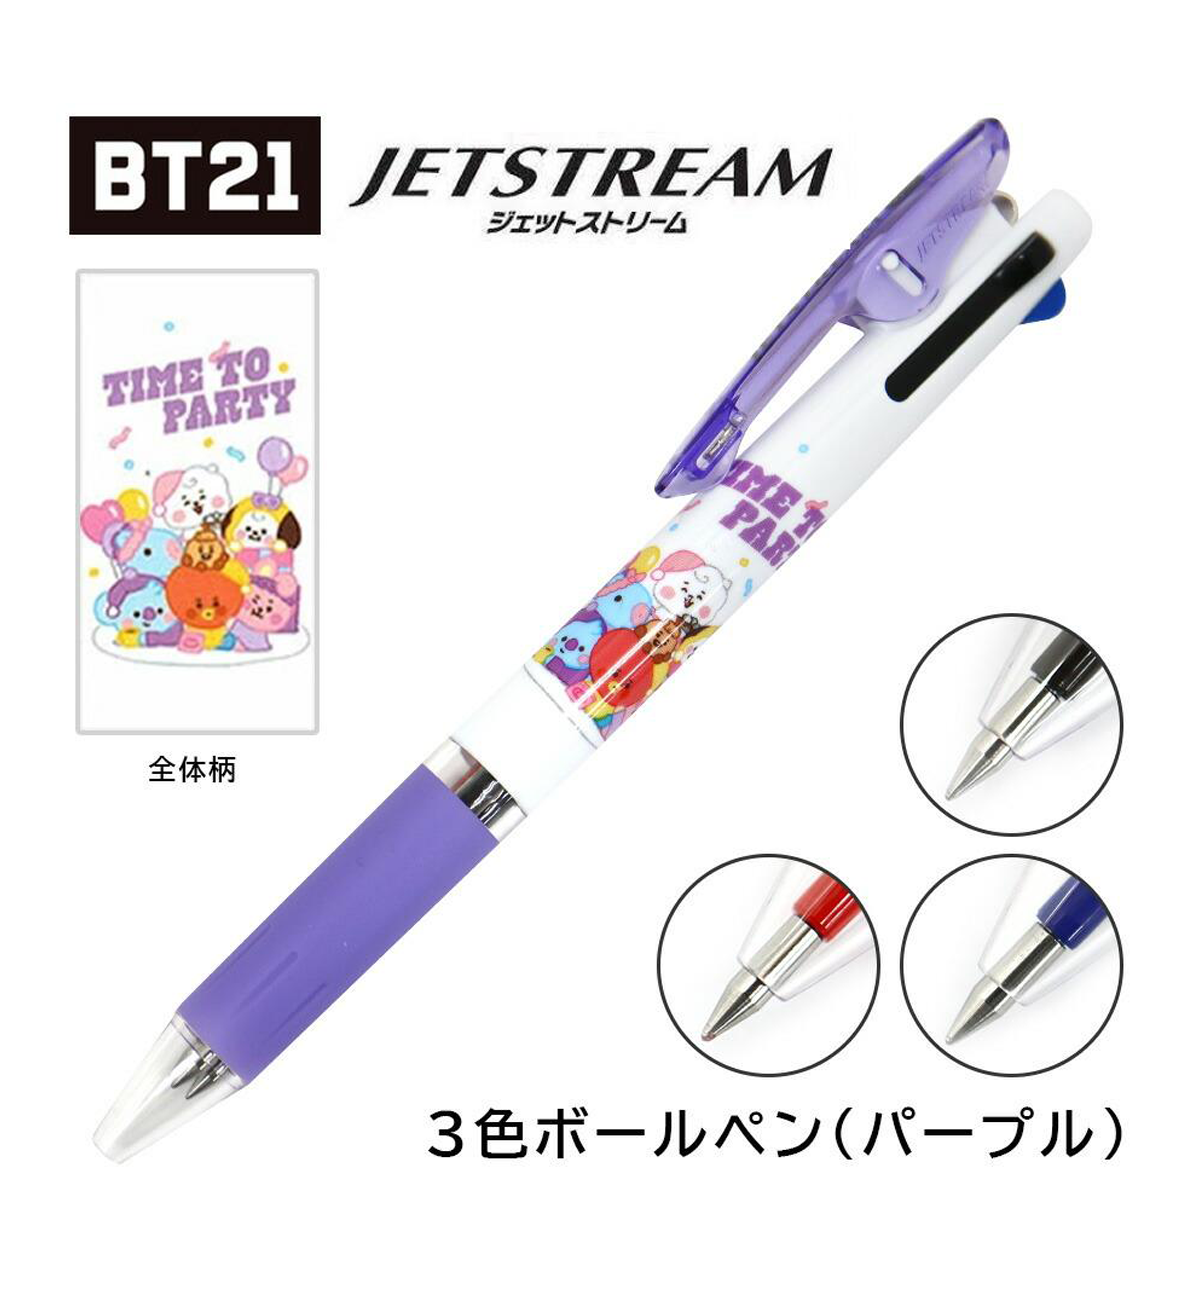 BT21 Jetstream 0.5mm Pen [Design B]